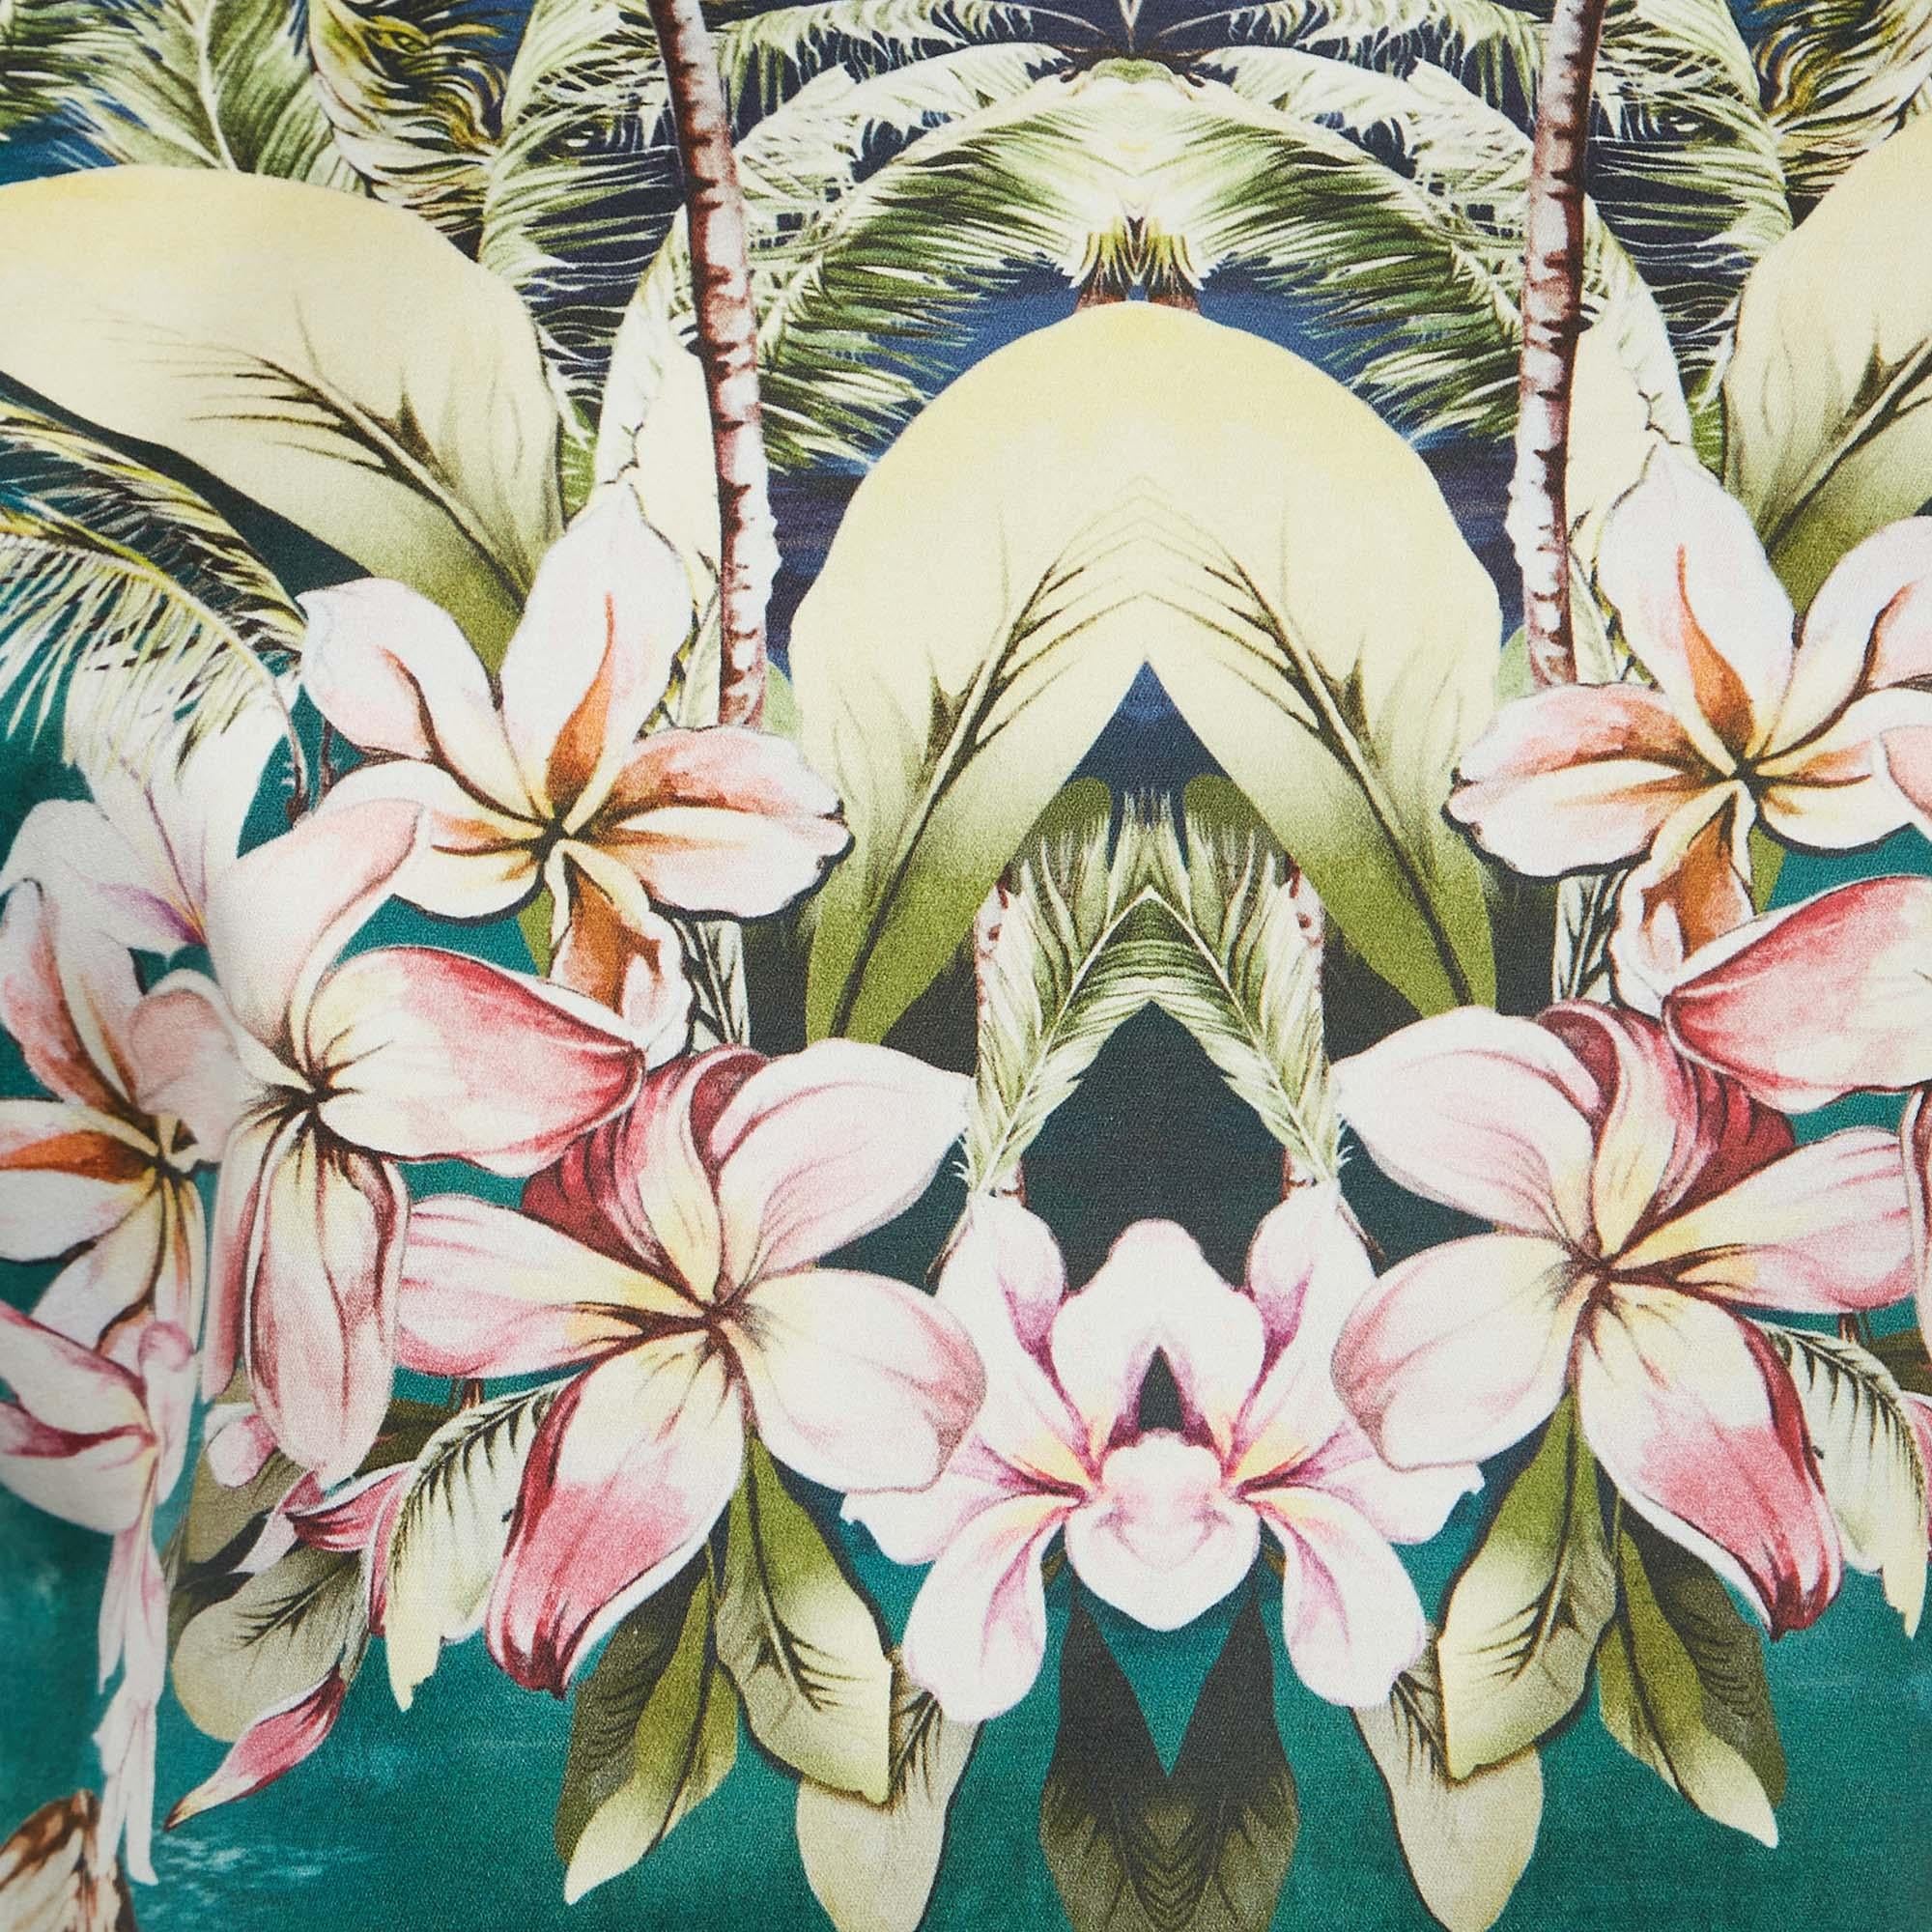 Stella McCartney Multicolor Hawaiian Print Cotton Buttoned Back Detail Top S In Excellent Condition For Sale In Dubai, Al Qouz 2